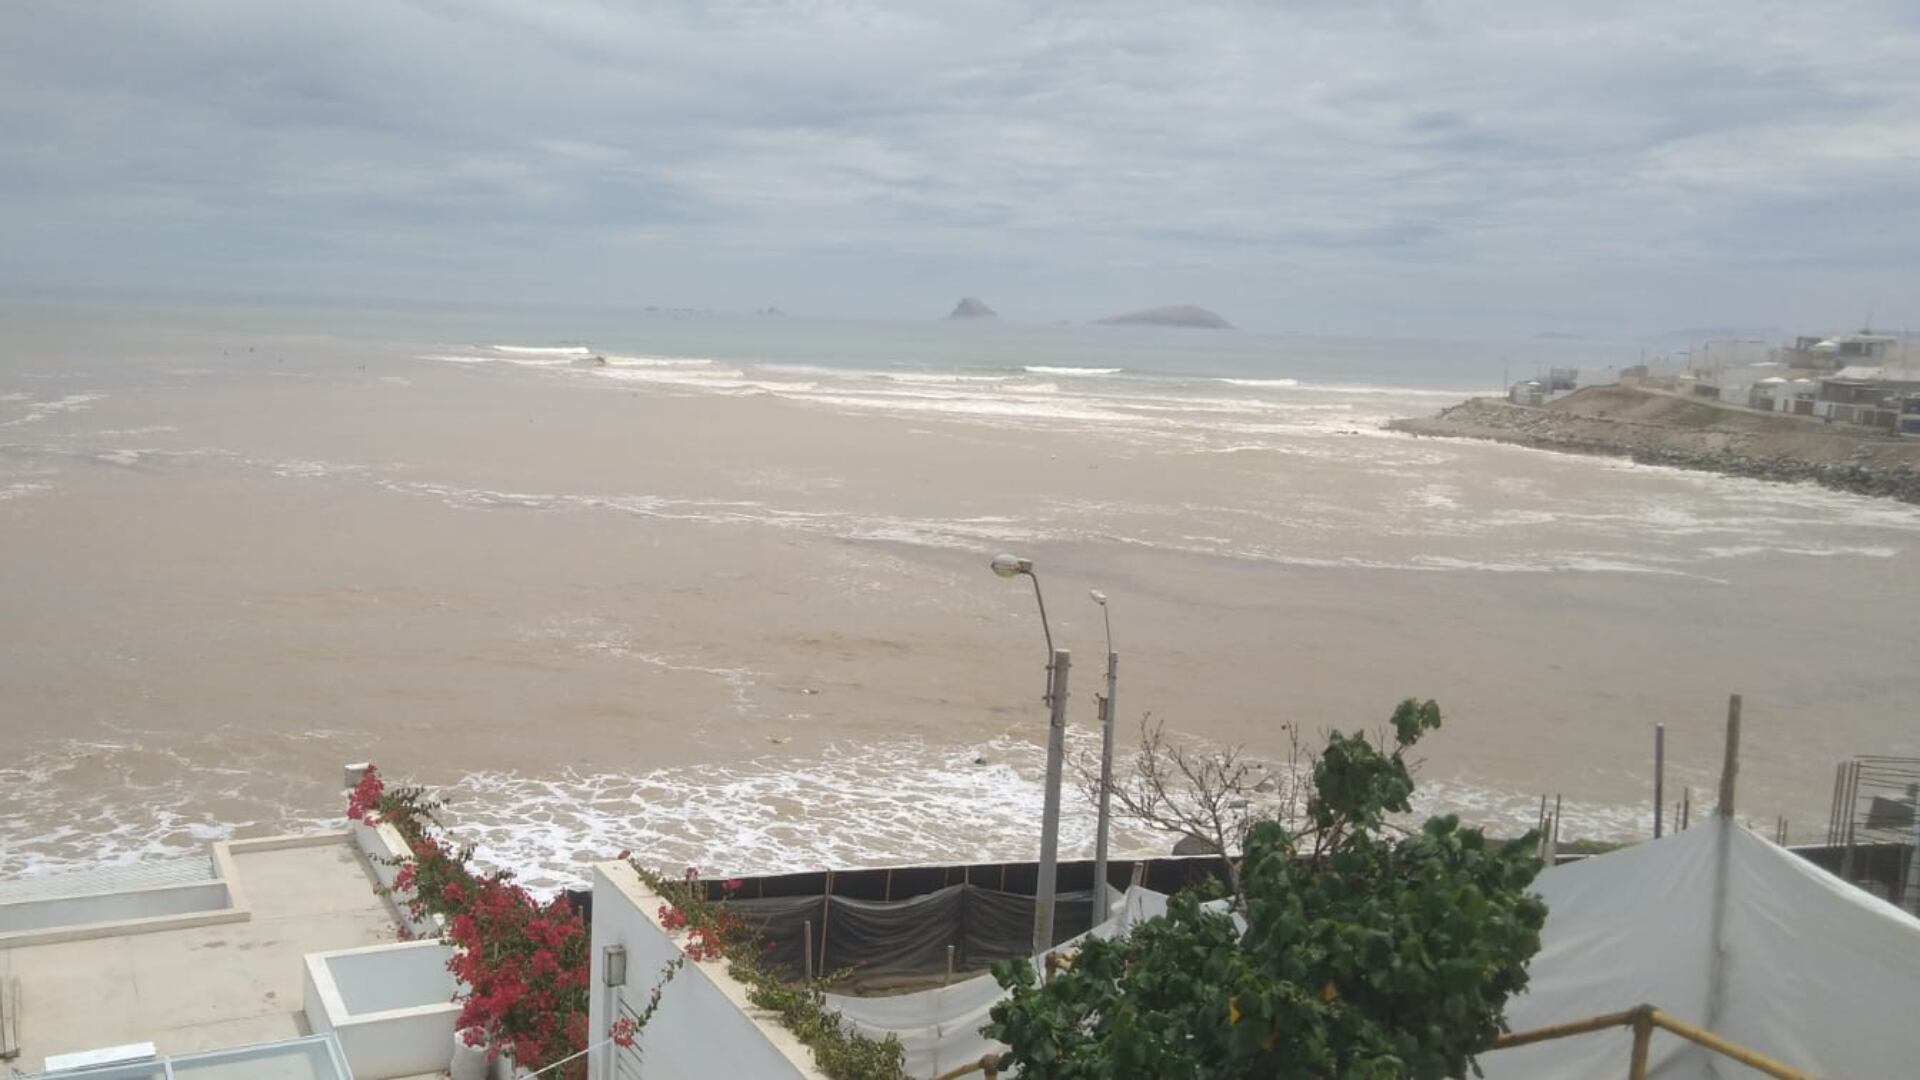 Nuevo Huaico surprises the residents of Punta Hermosa